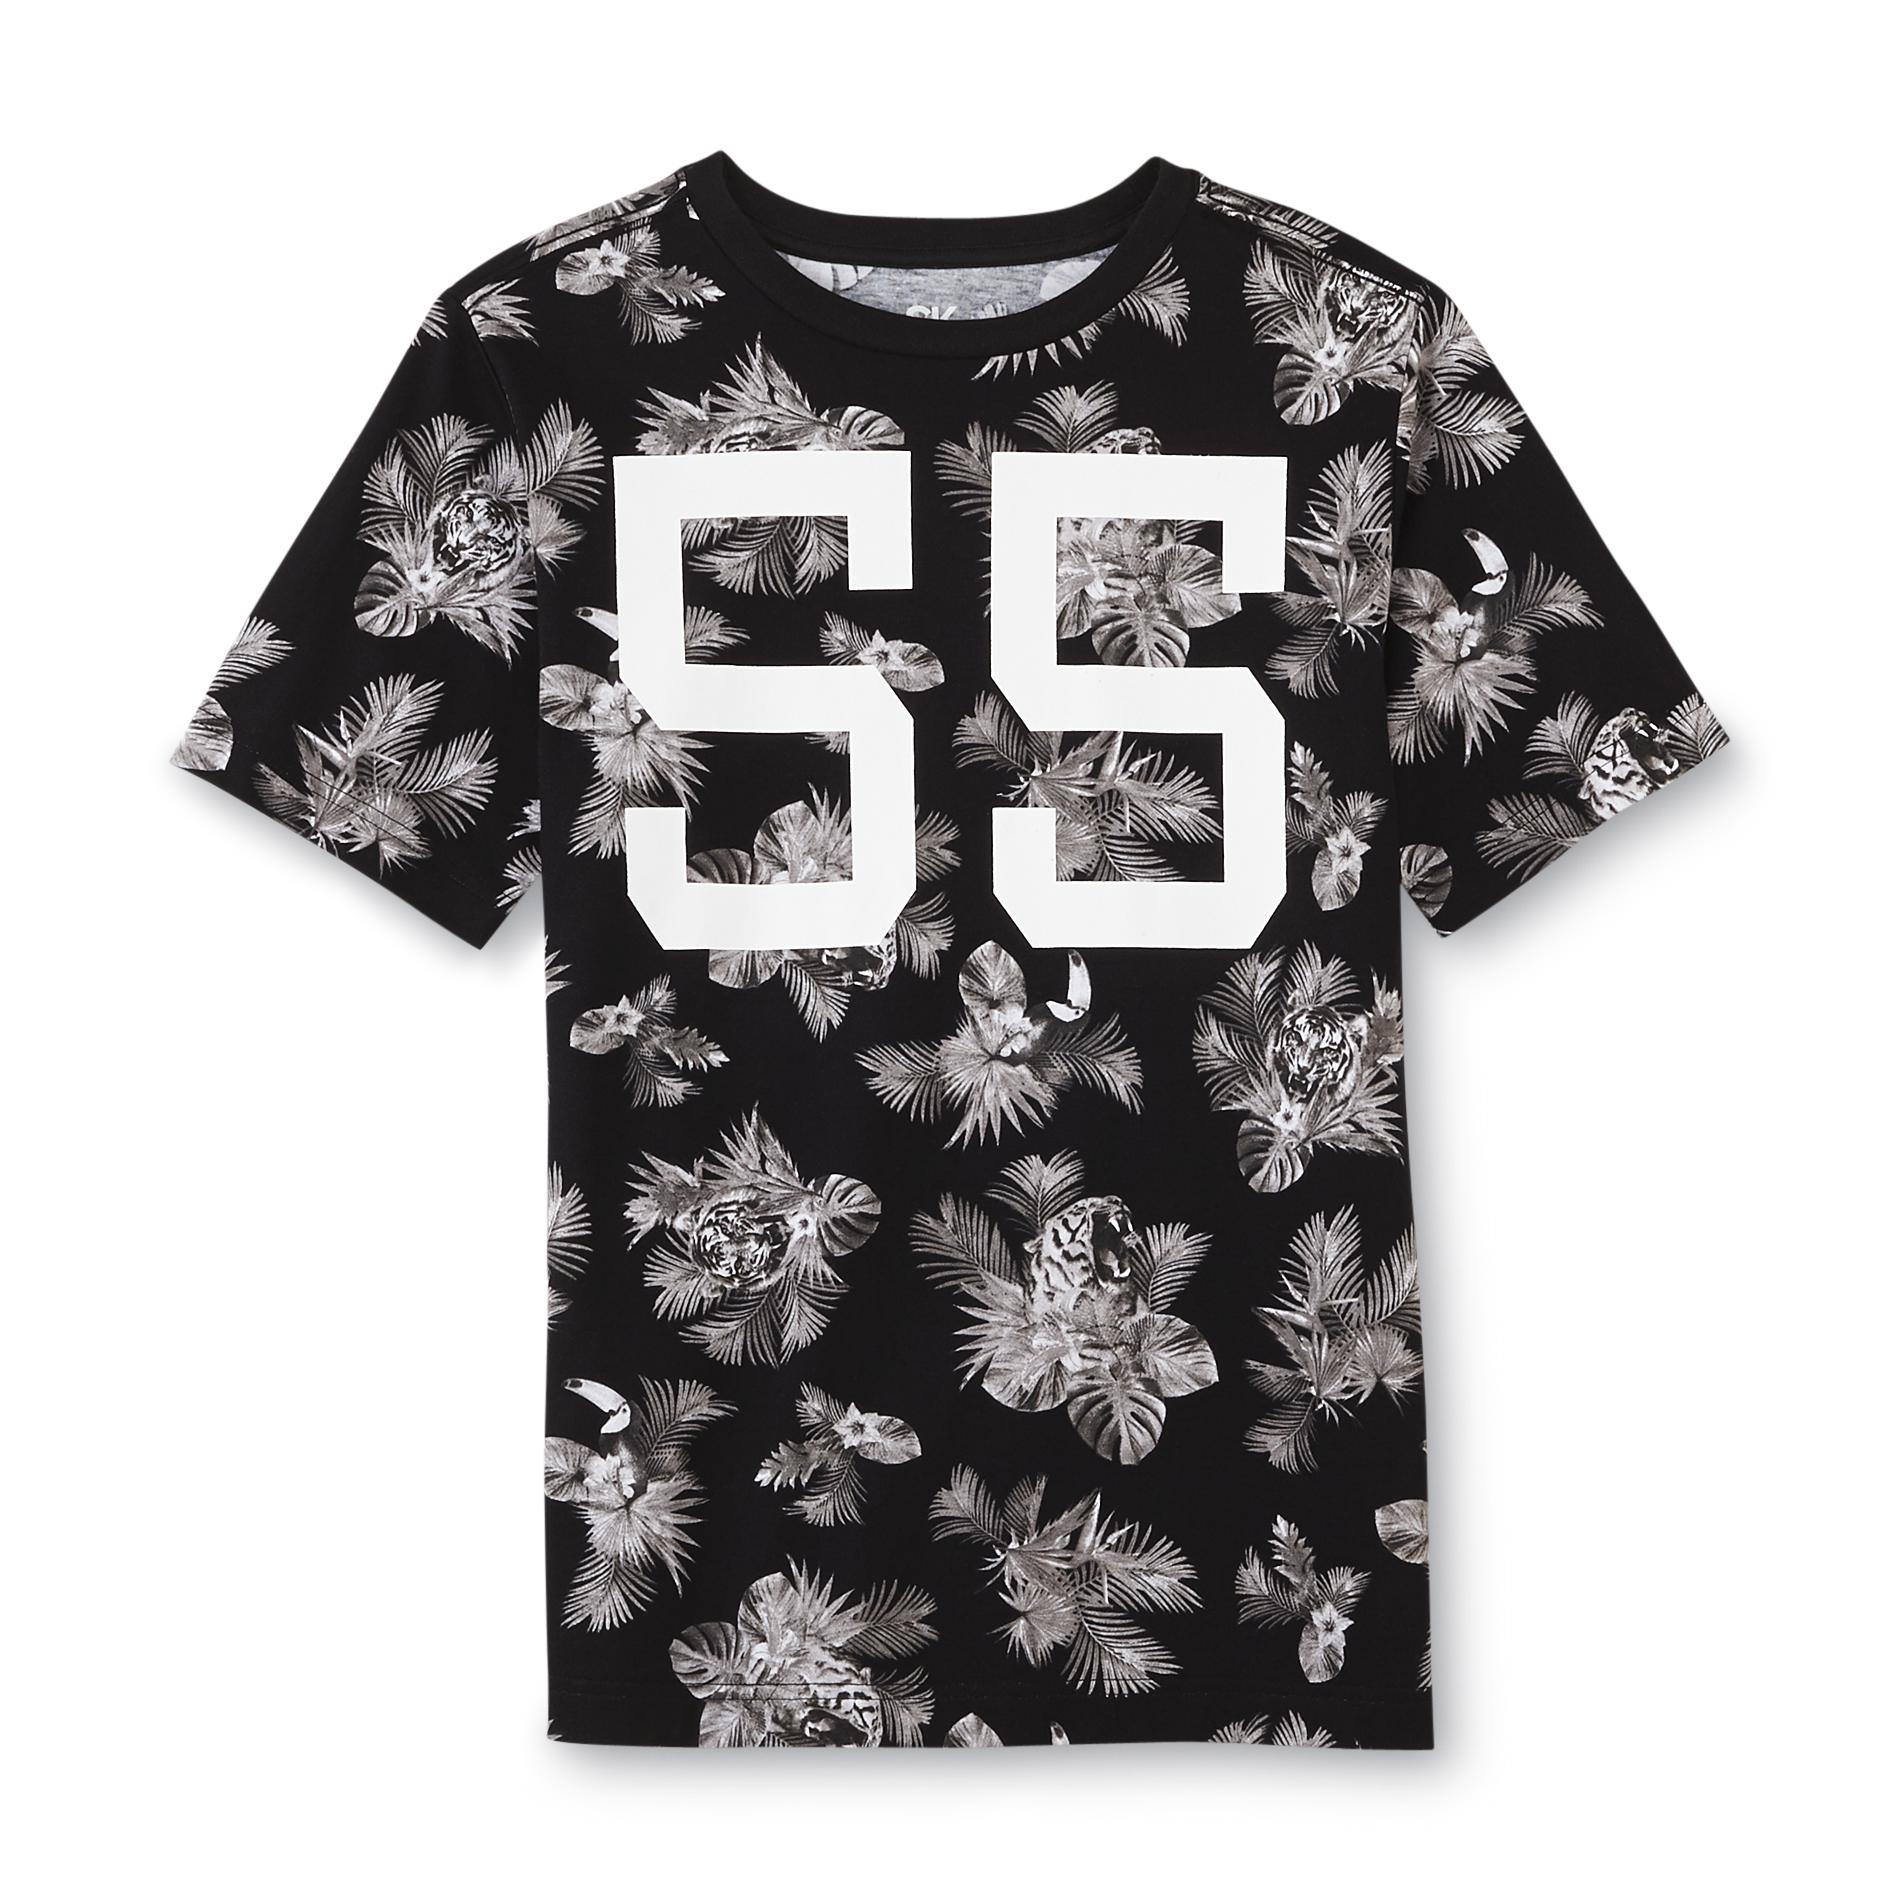 SK2 Boy's Graphic T-Shirt - Numeric Floral Print